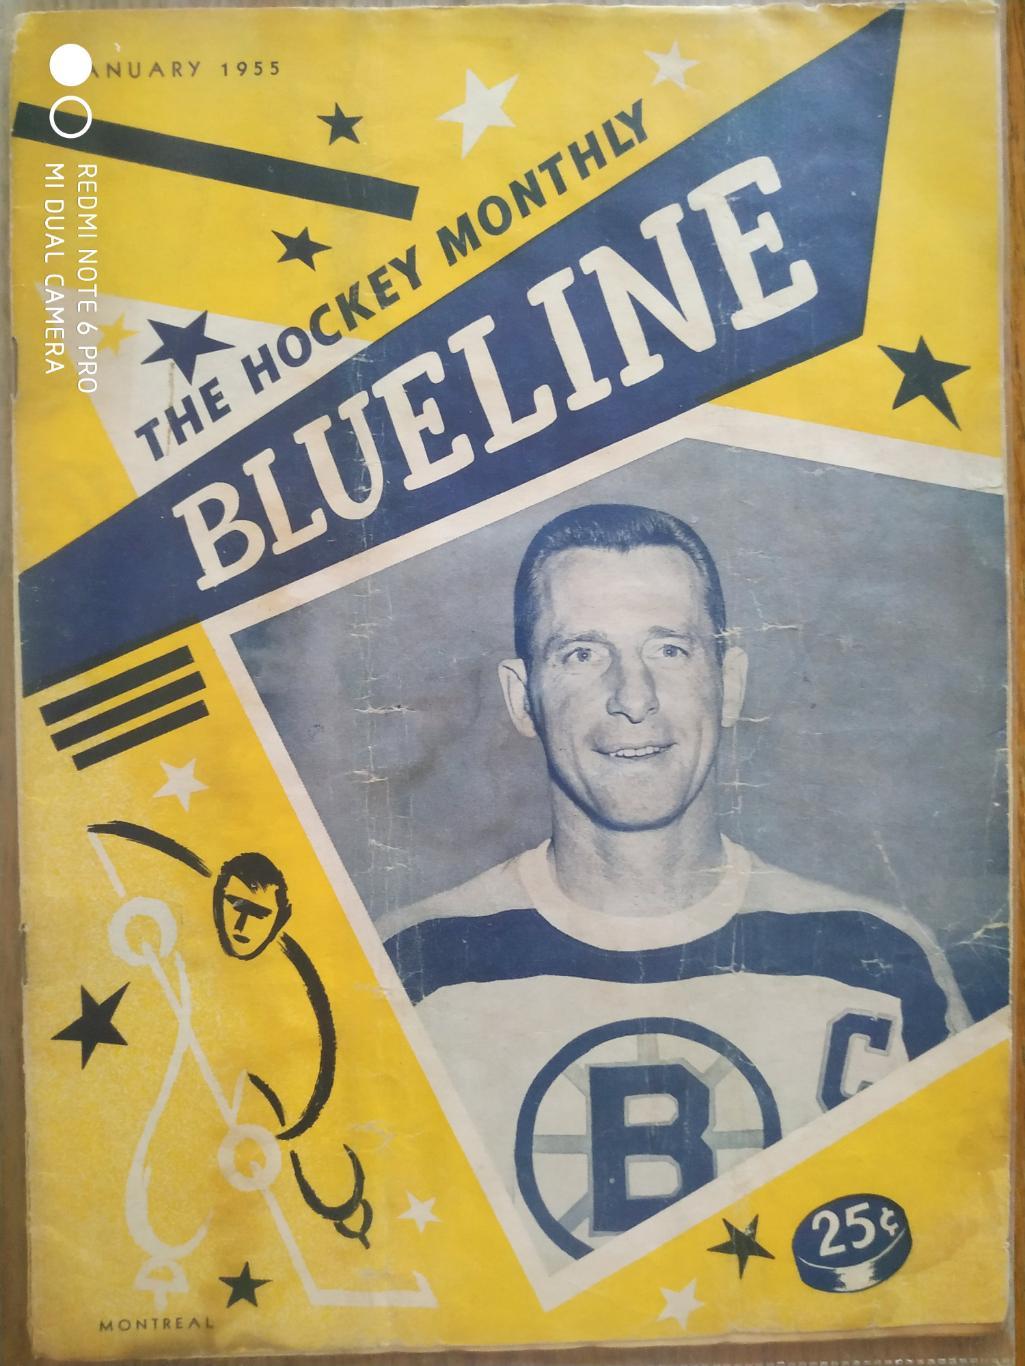 ЖУРНАЛ ЕЖЕМЕСЯЧНИК НХЛ NHL 1955 JANUARY THE HOCKEY MONTHLY BLUELINE